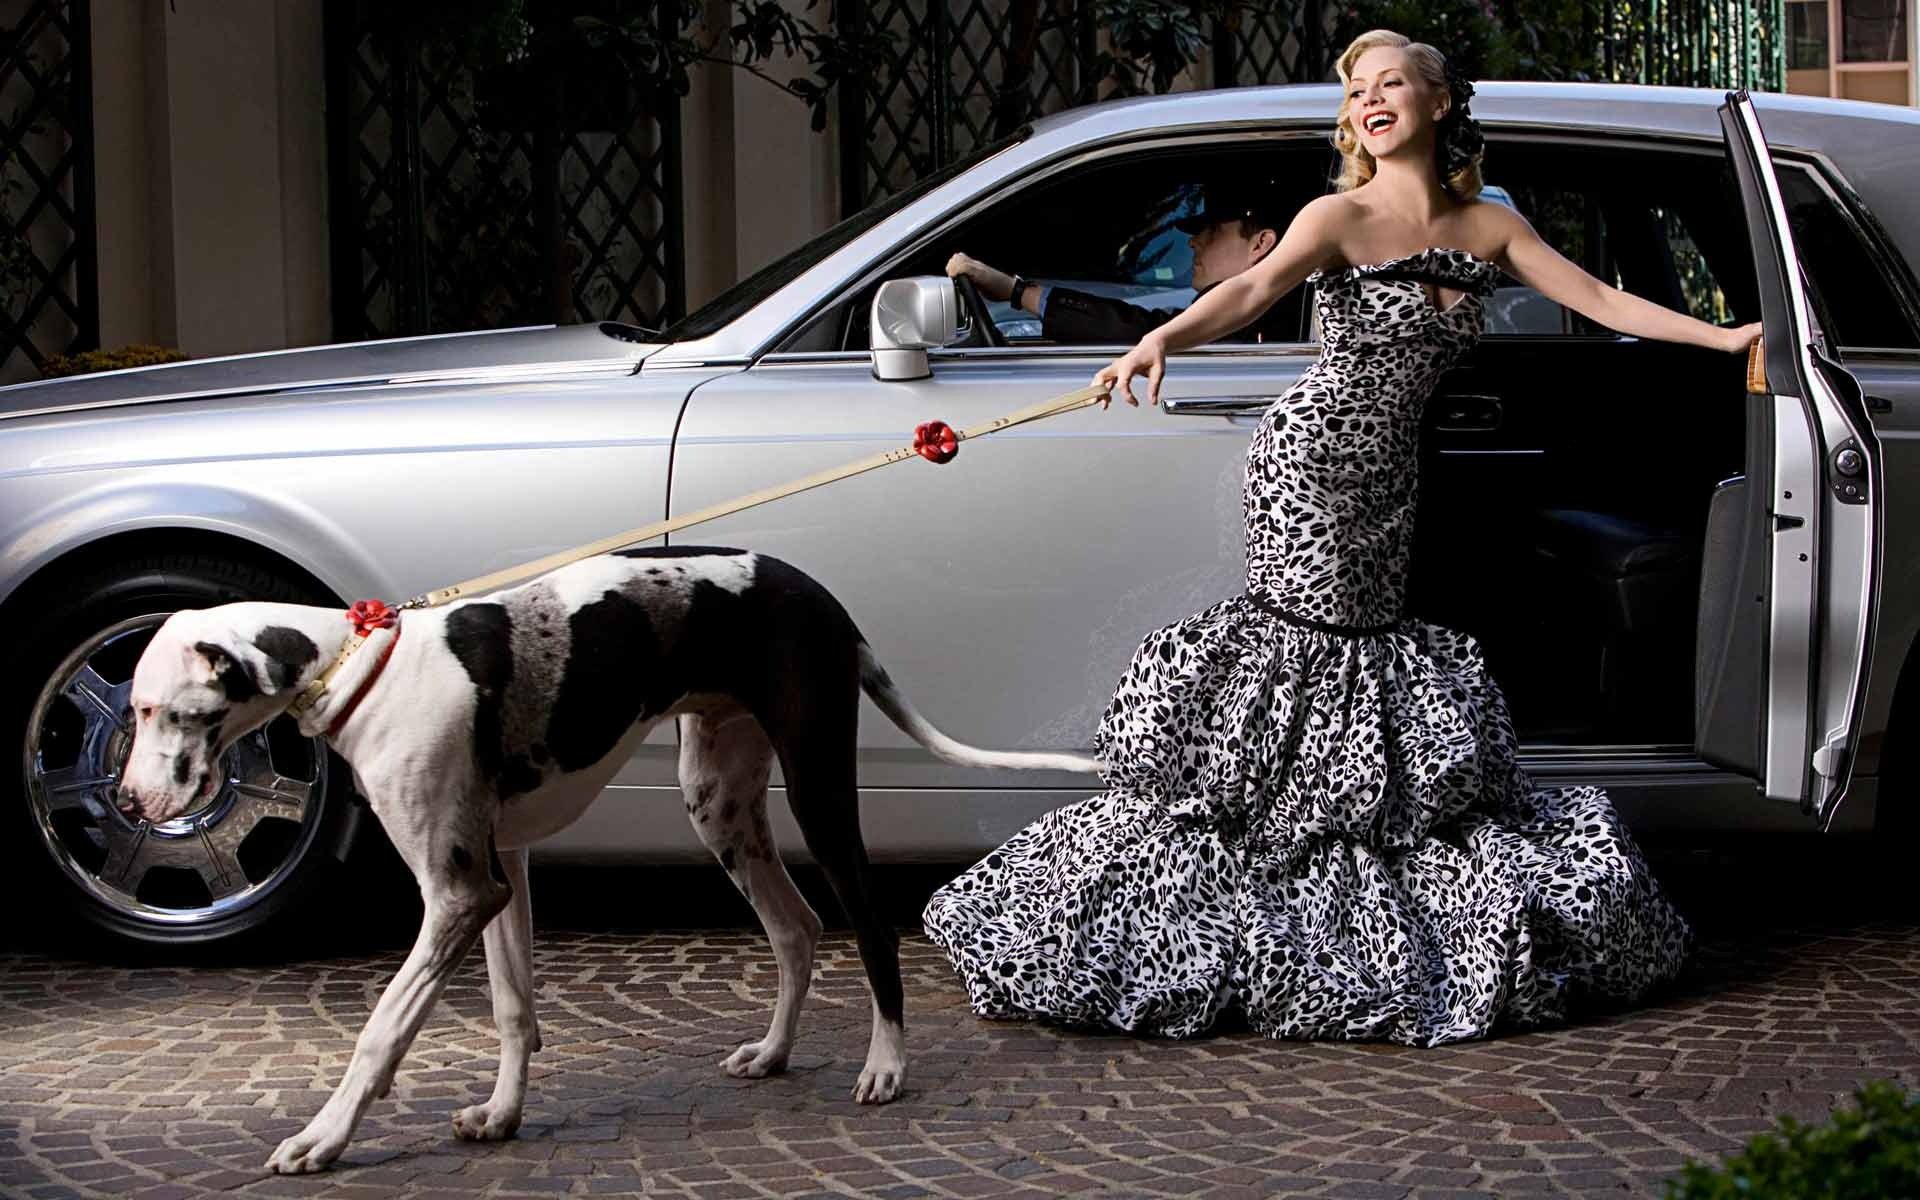 Woman 3 dog. Богатая женщина с собачкой. Богатая девушка. Богатые девушки с собачками. Девушка с собакой в машине.